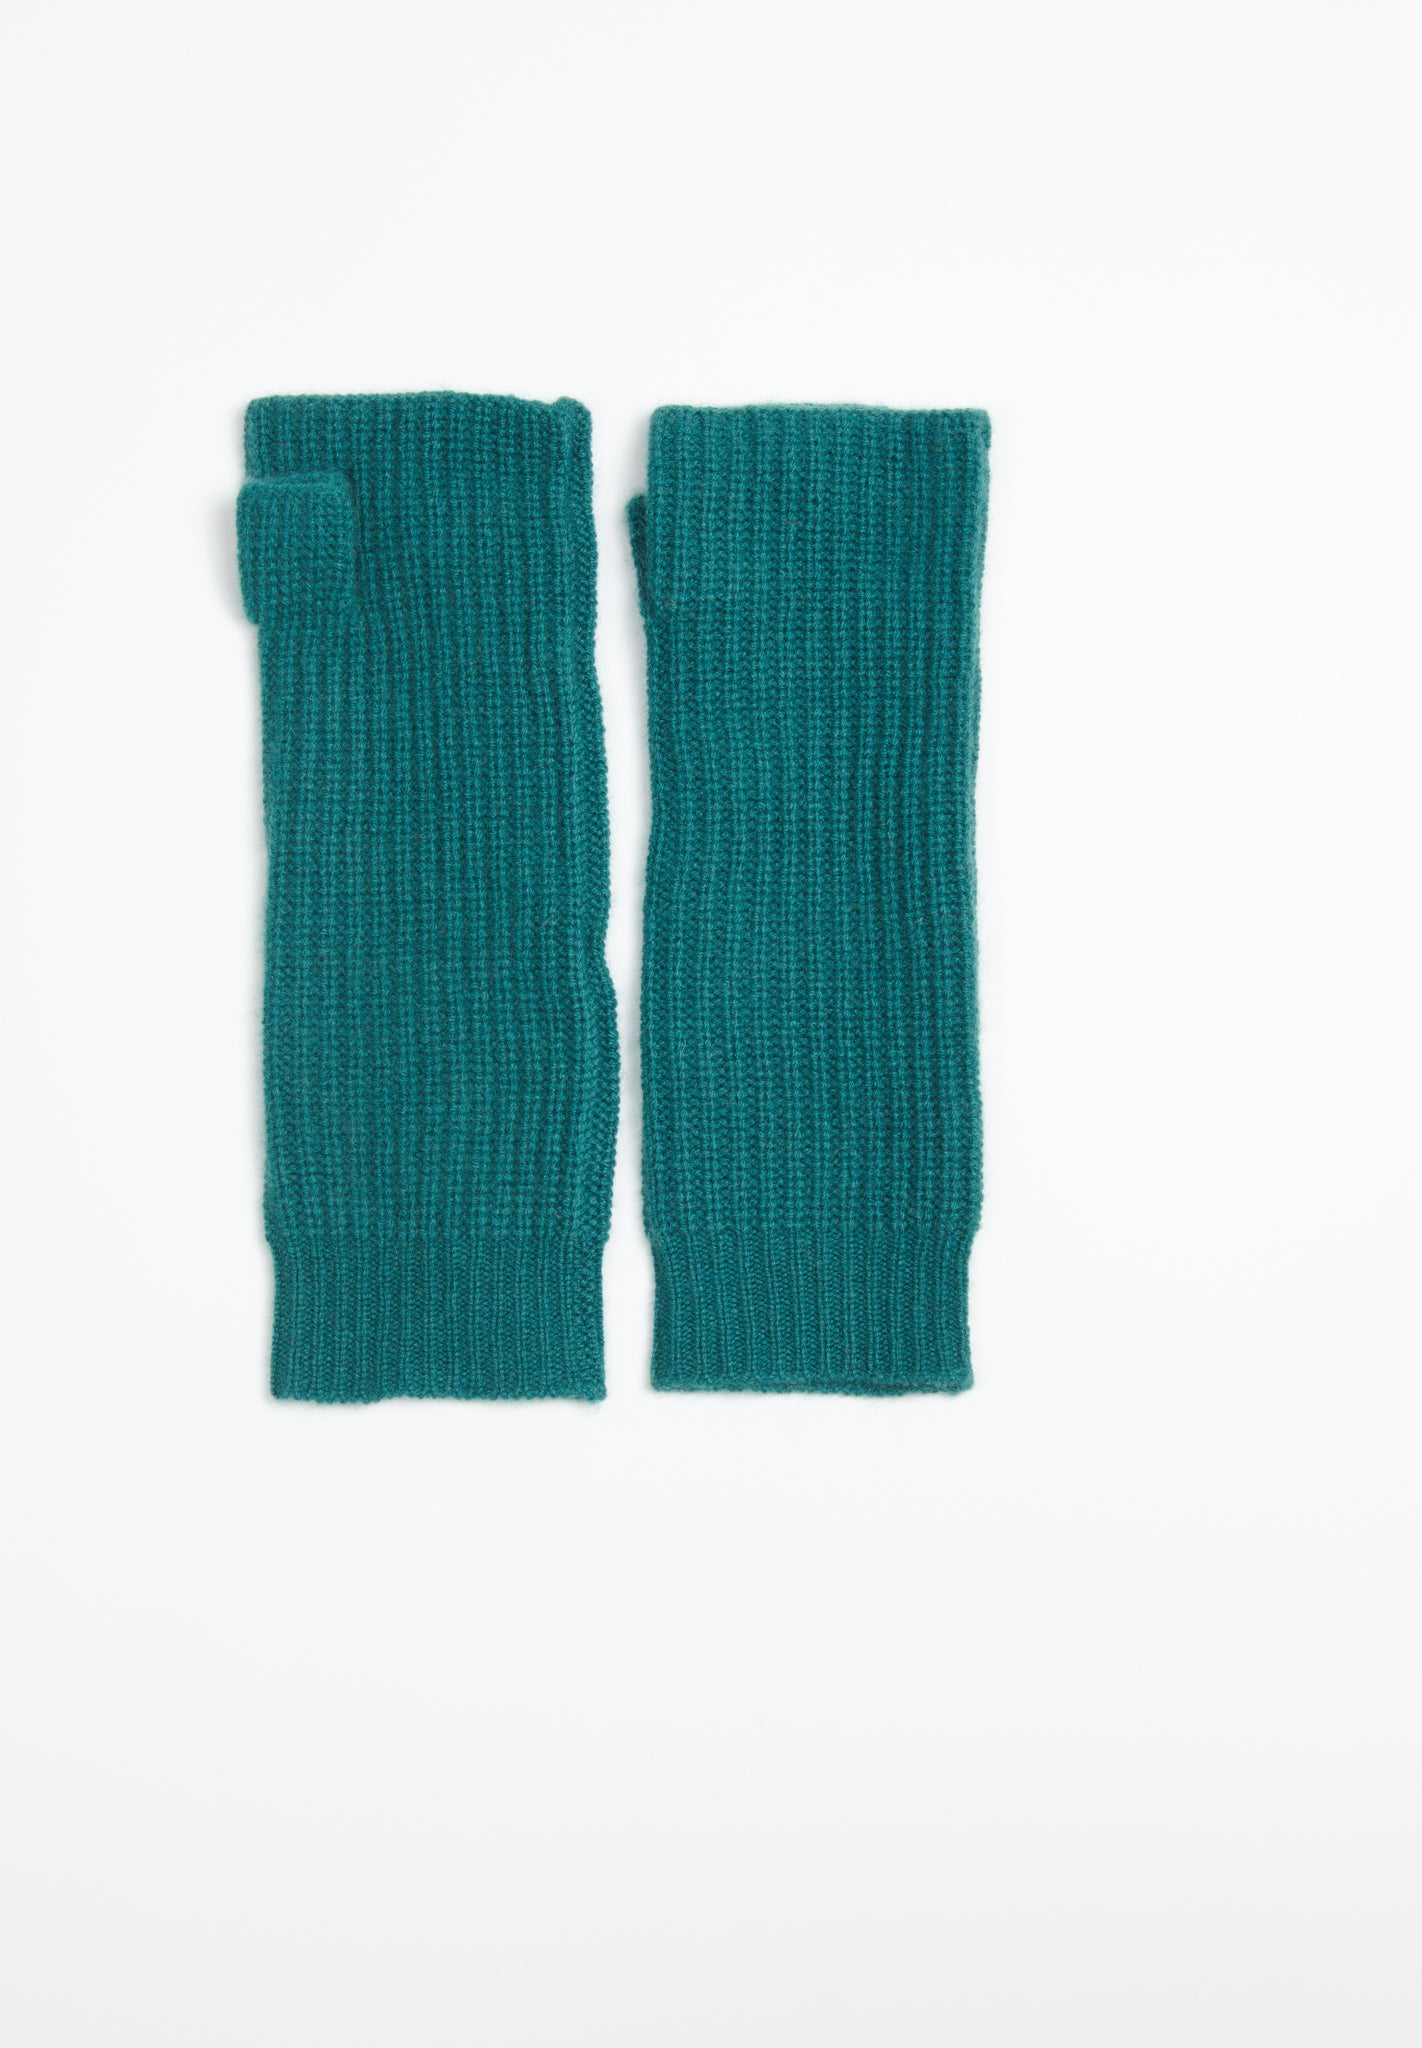 UNI 8 English rib knitted mittens in 4-thread cashmere dark green